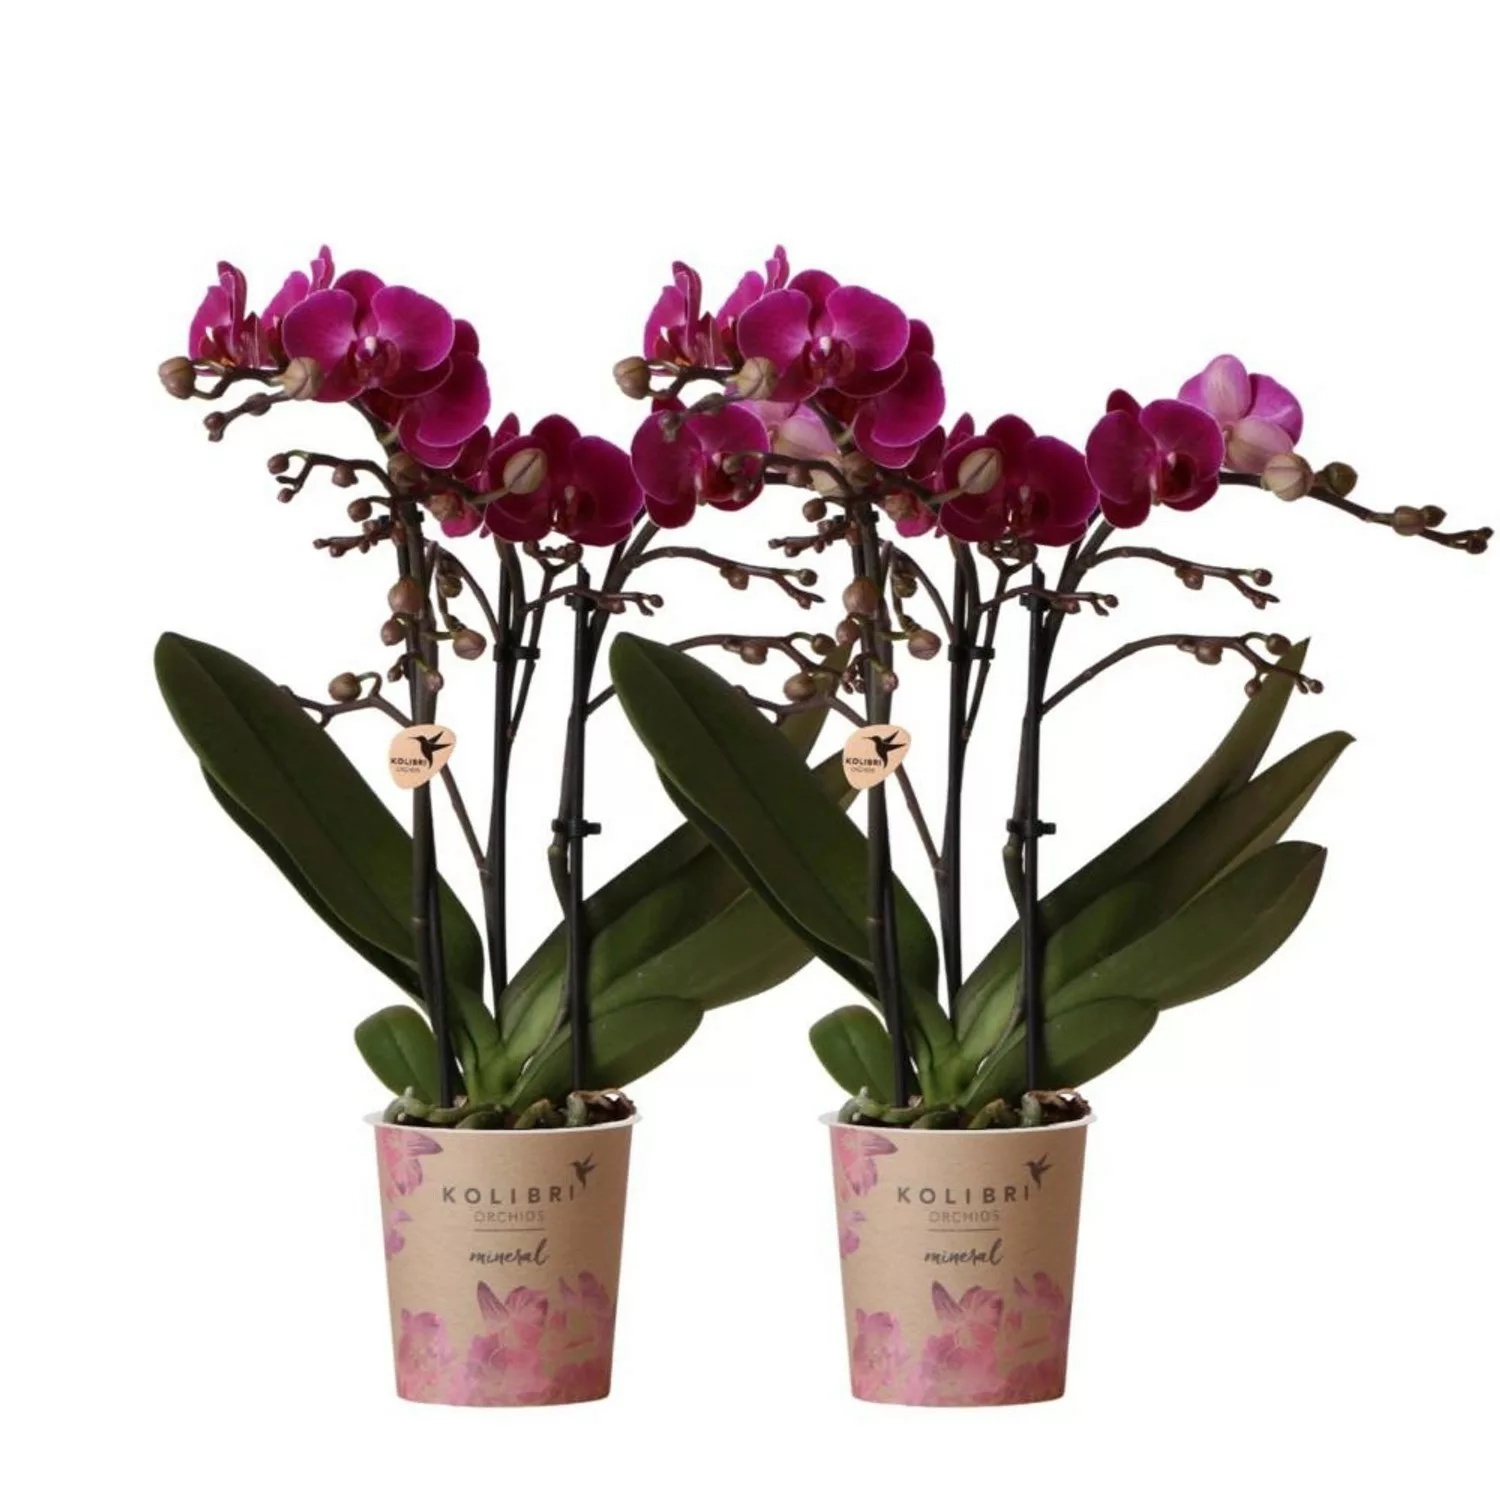 Kolibri Orchideen Combi Deal von 2 Lila Phalaenopsis Orchideen Morelia Topf günstig online kaufen